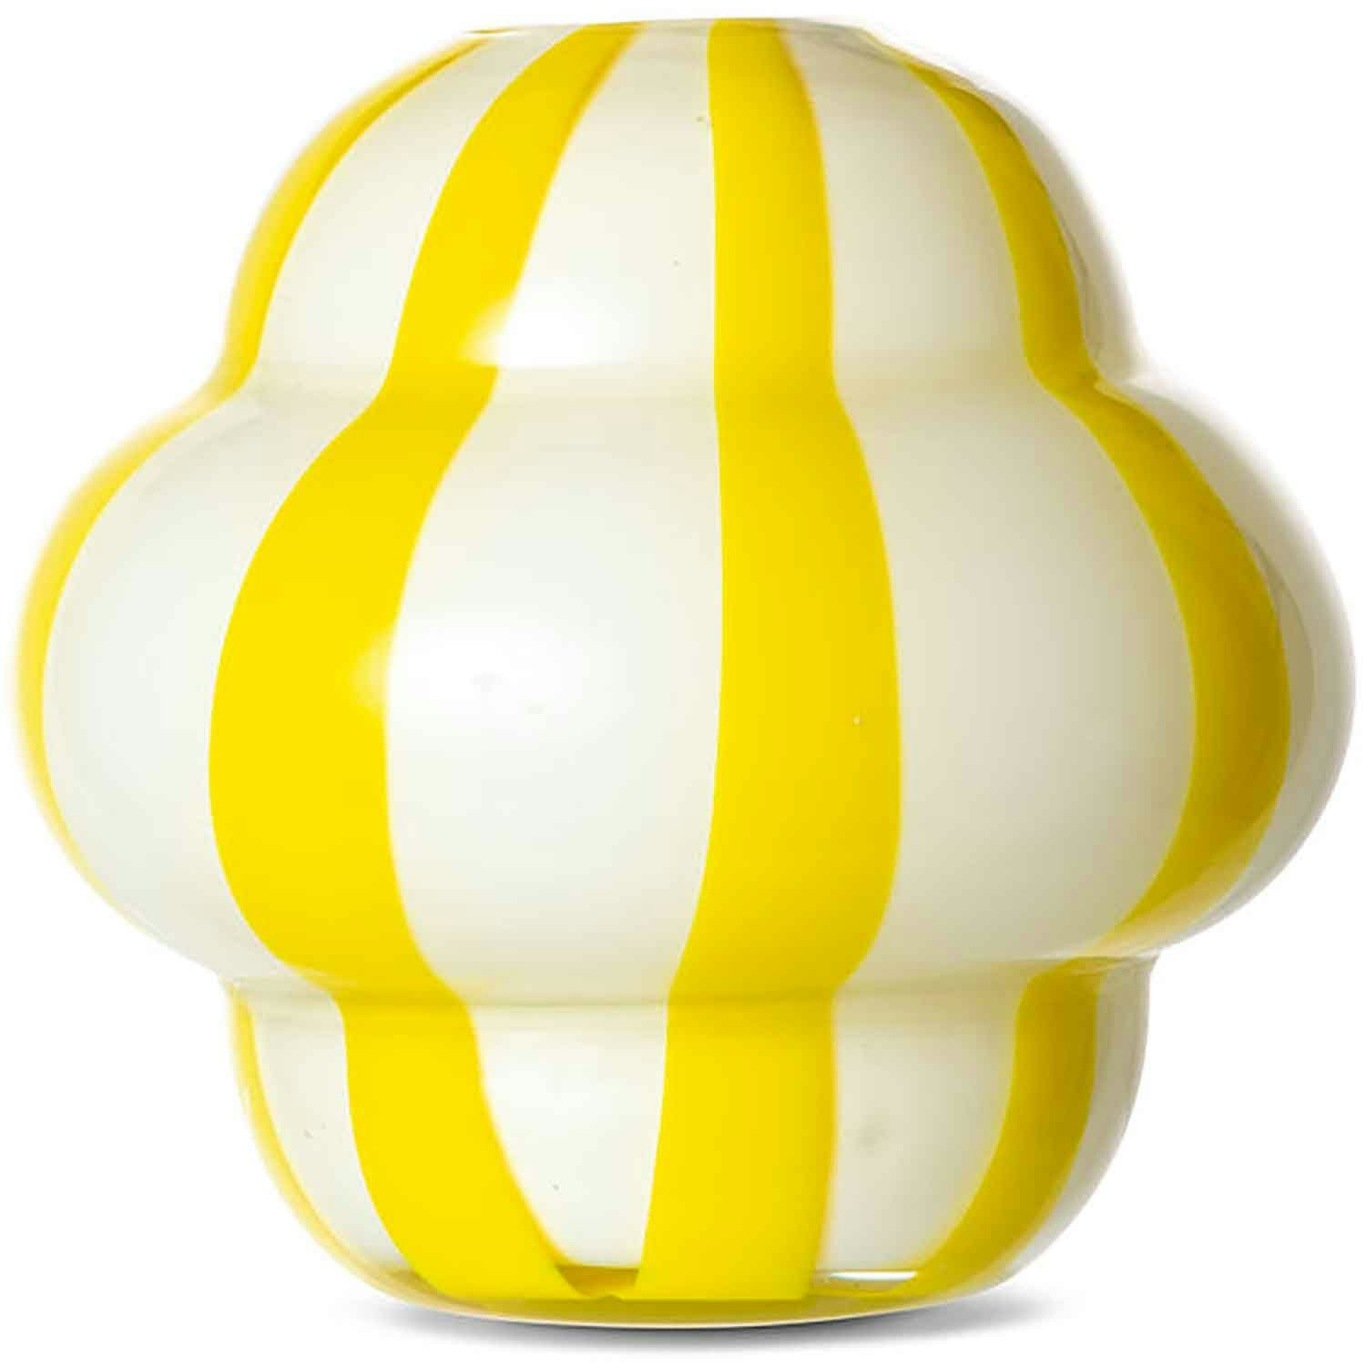 https://royaldesign.com/image/2/byon-curlie-vase-white-yellow-0?w=800&quality=80